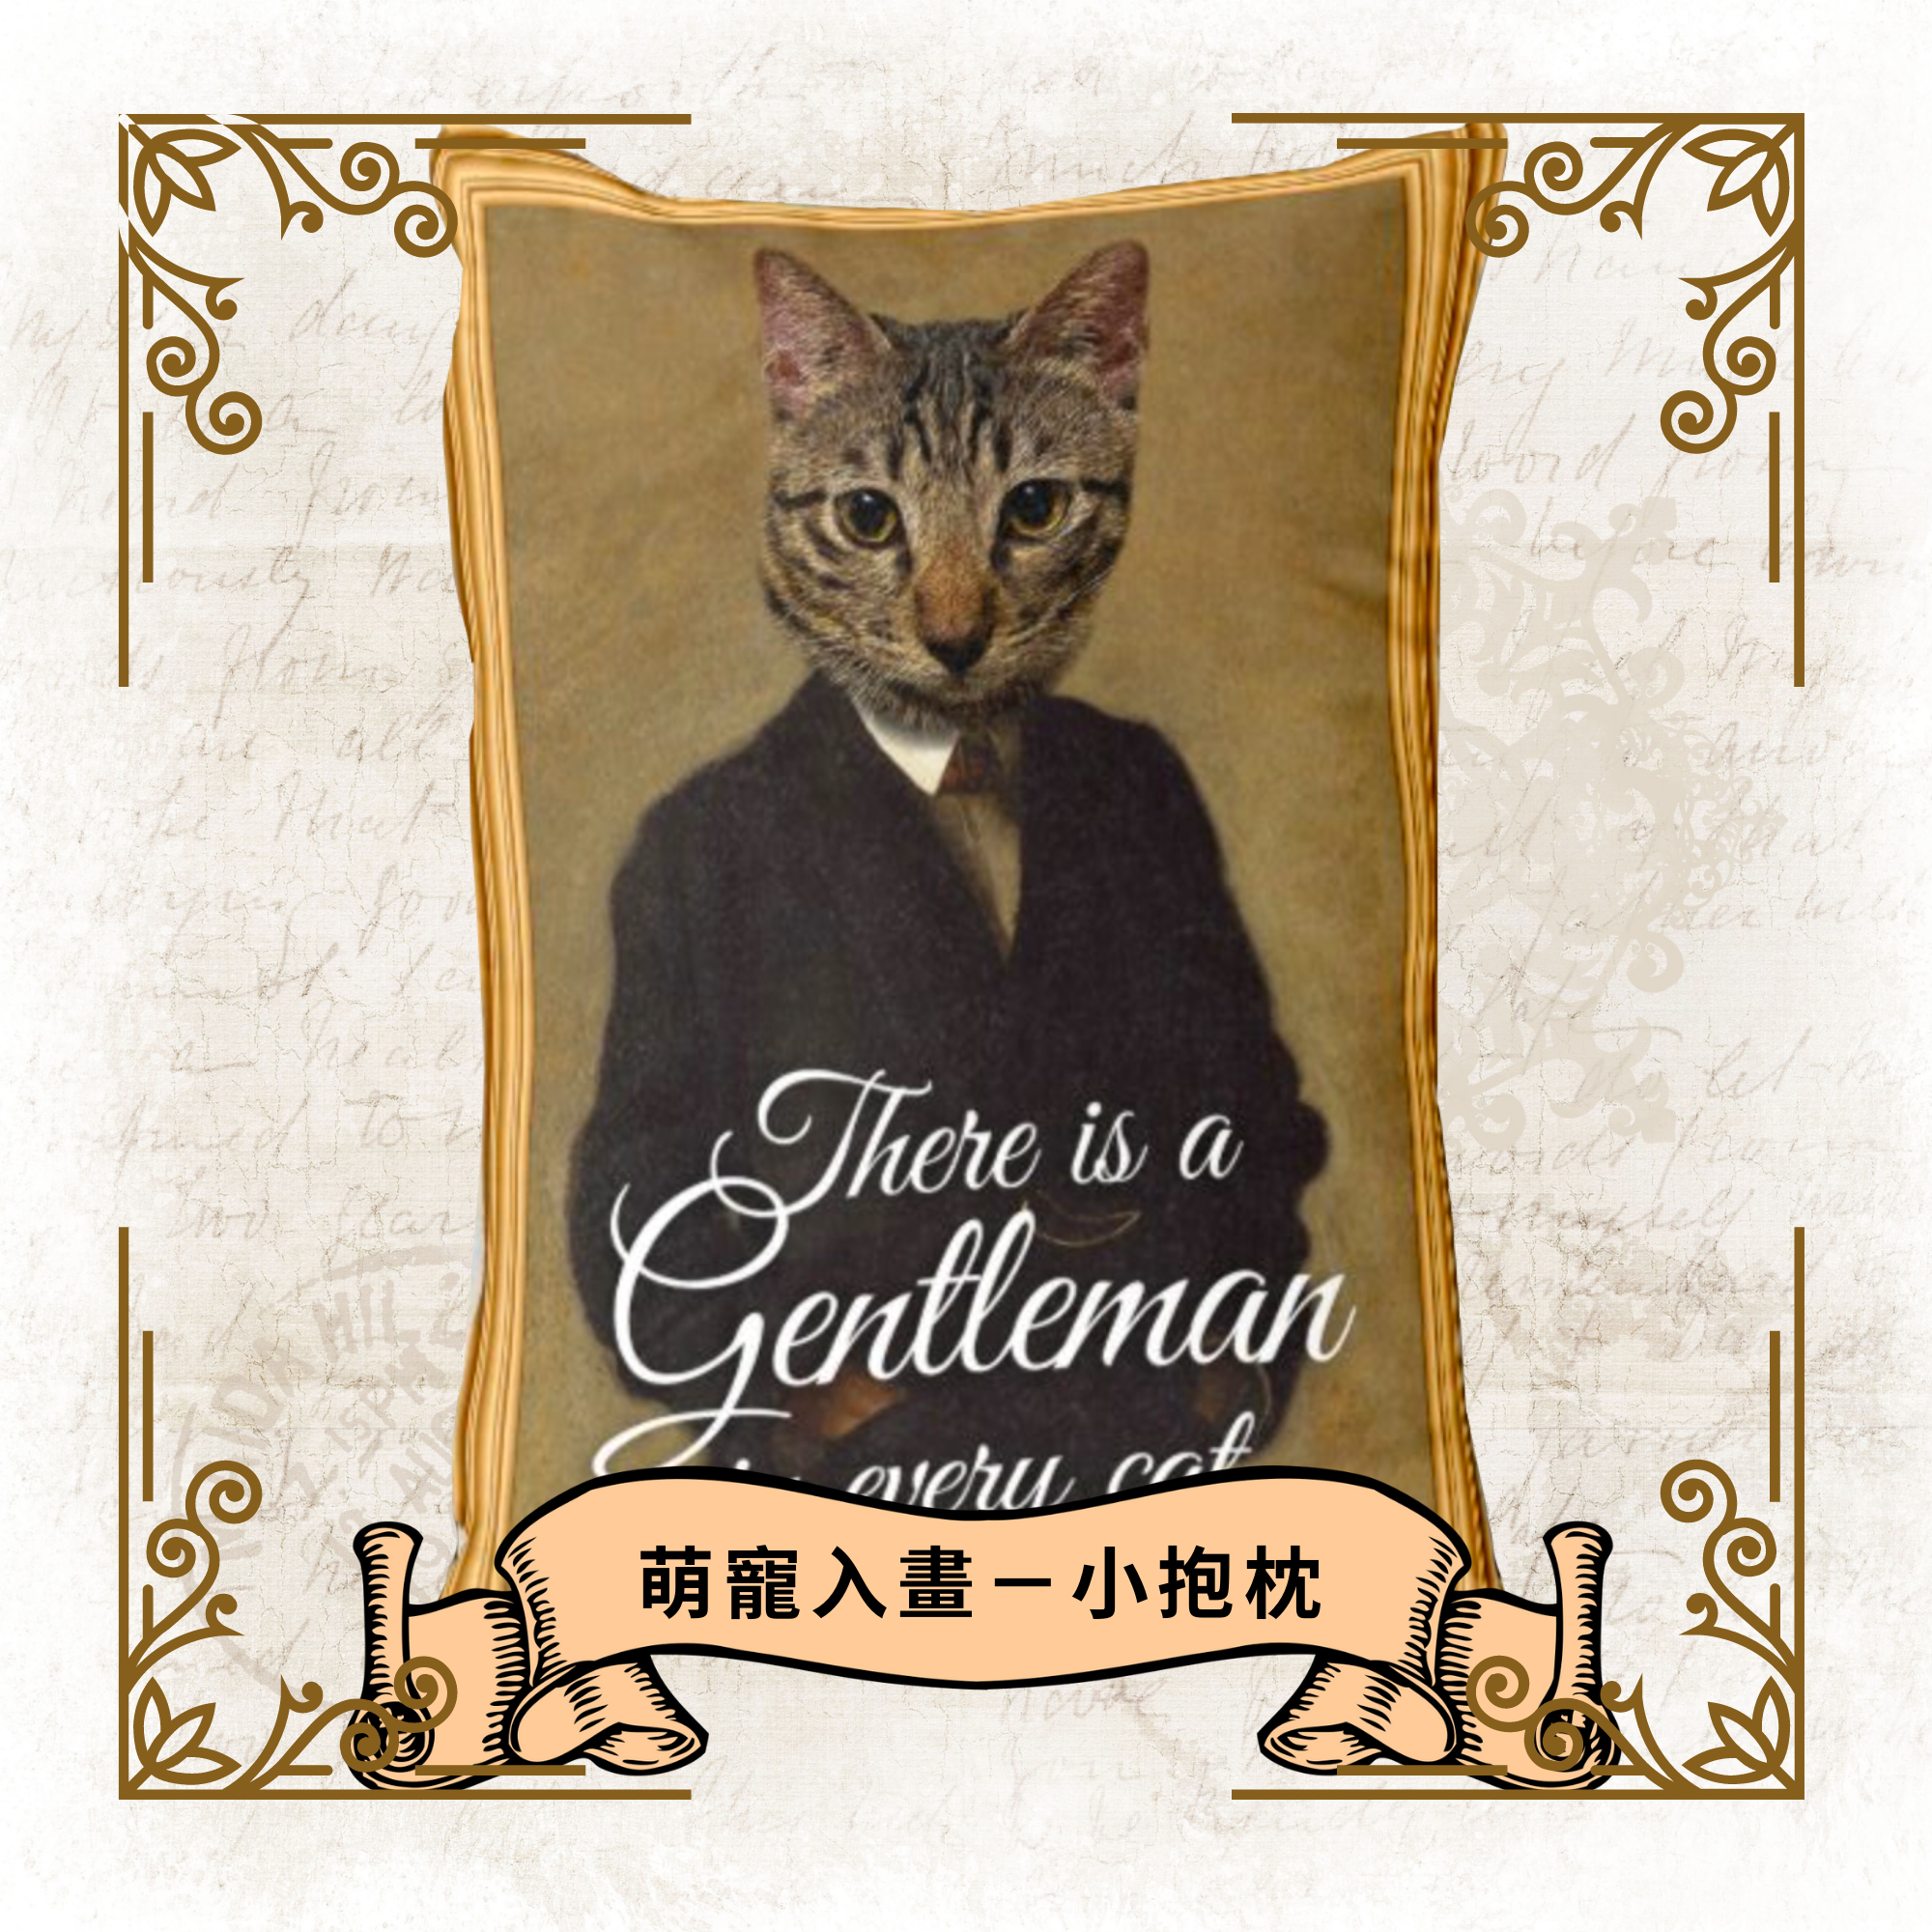 [萌寵入畫] There is a gentleman in every cat 古典畫系列抱枕靠枕午睡枕 - HKGIFTFORU